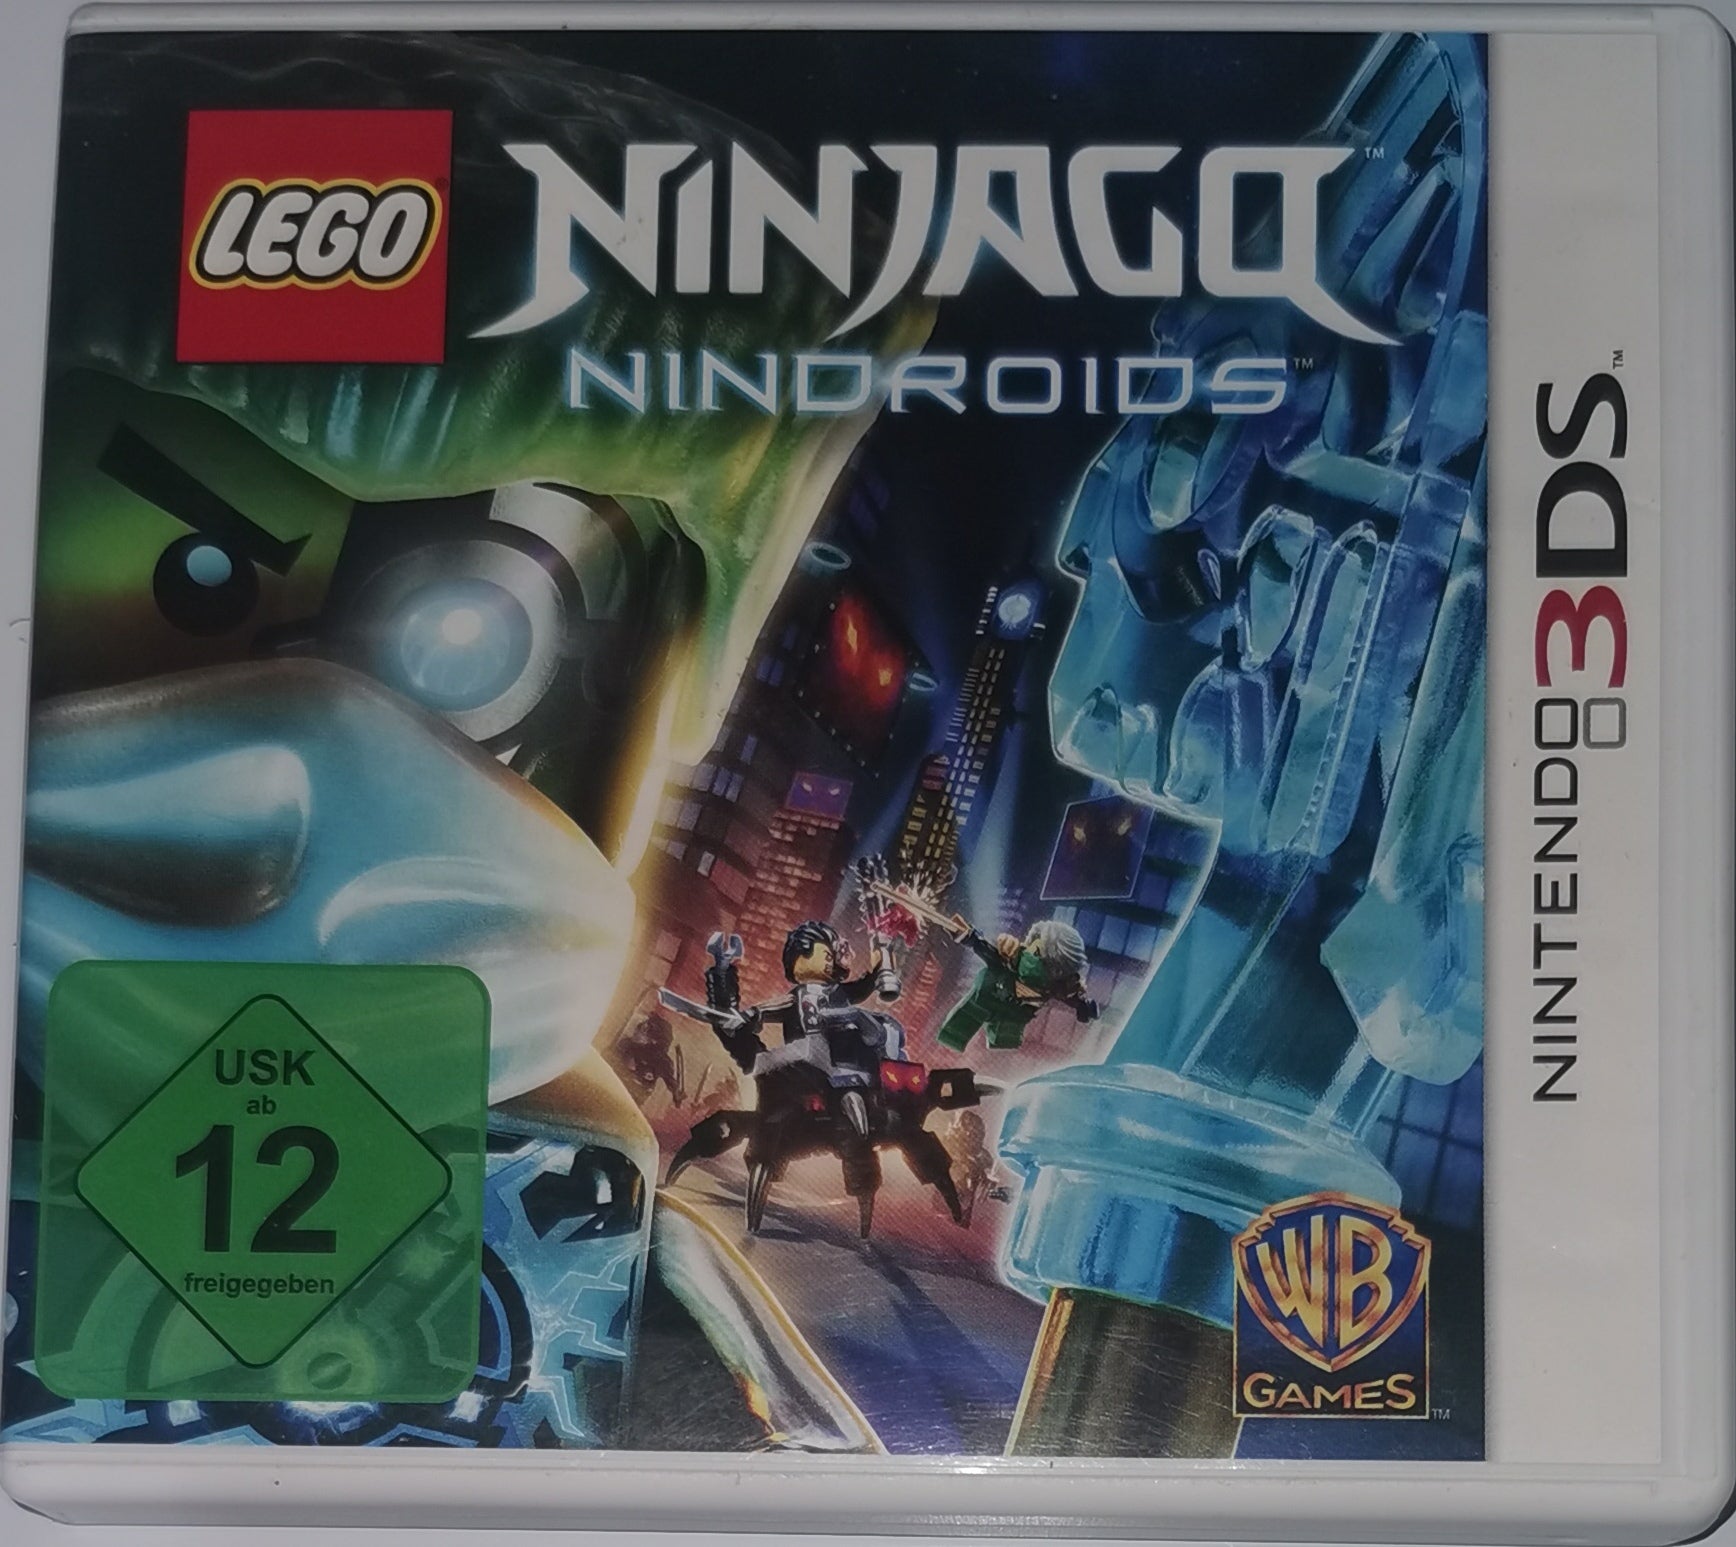 LEGO Ninjago Nindroids (Nintendo 3DS) [Sehr Gut]